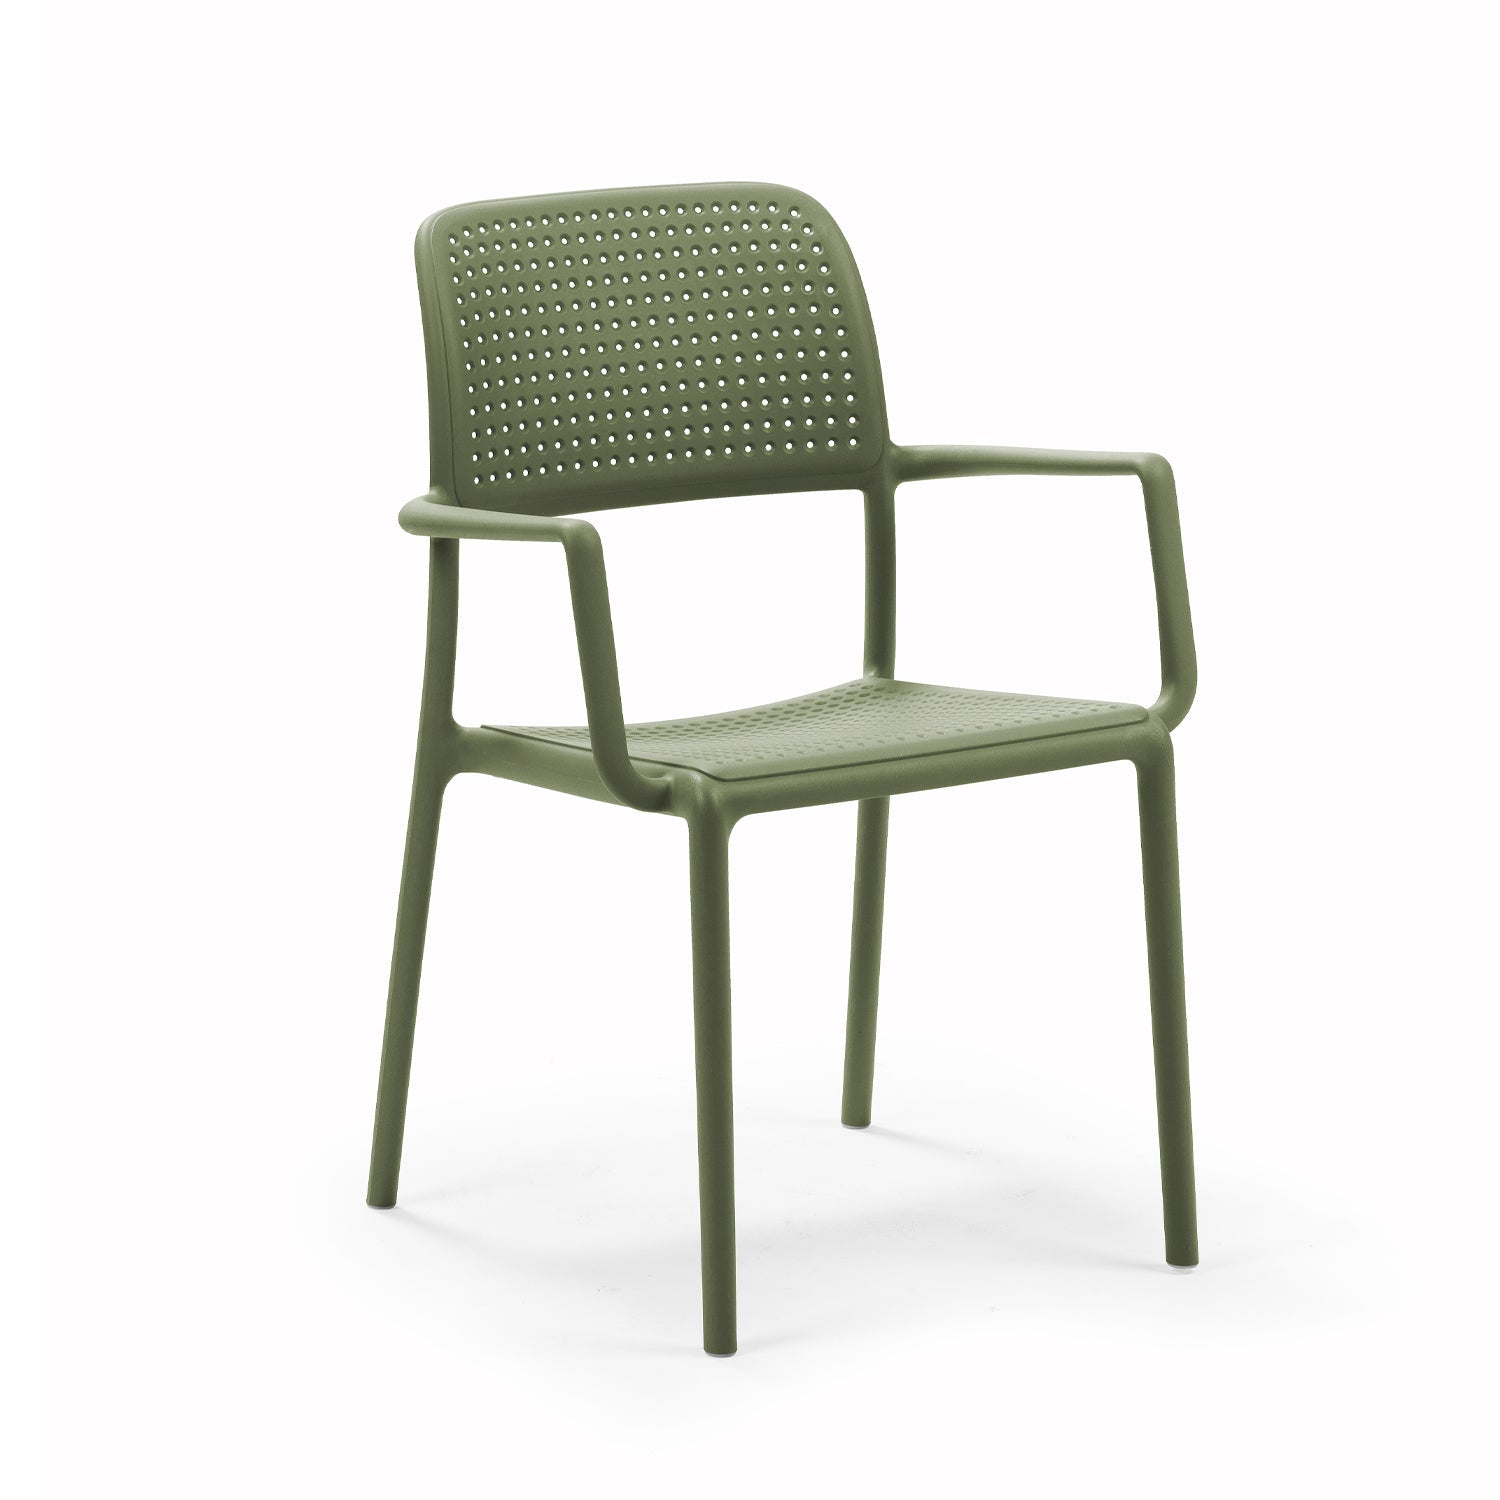 Bora Garden Chair By Nardi In Olive